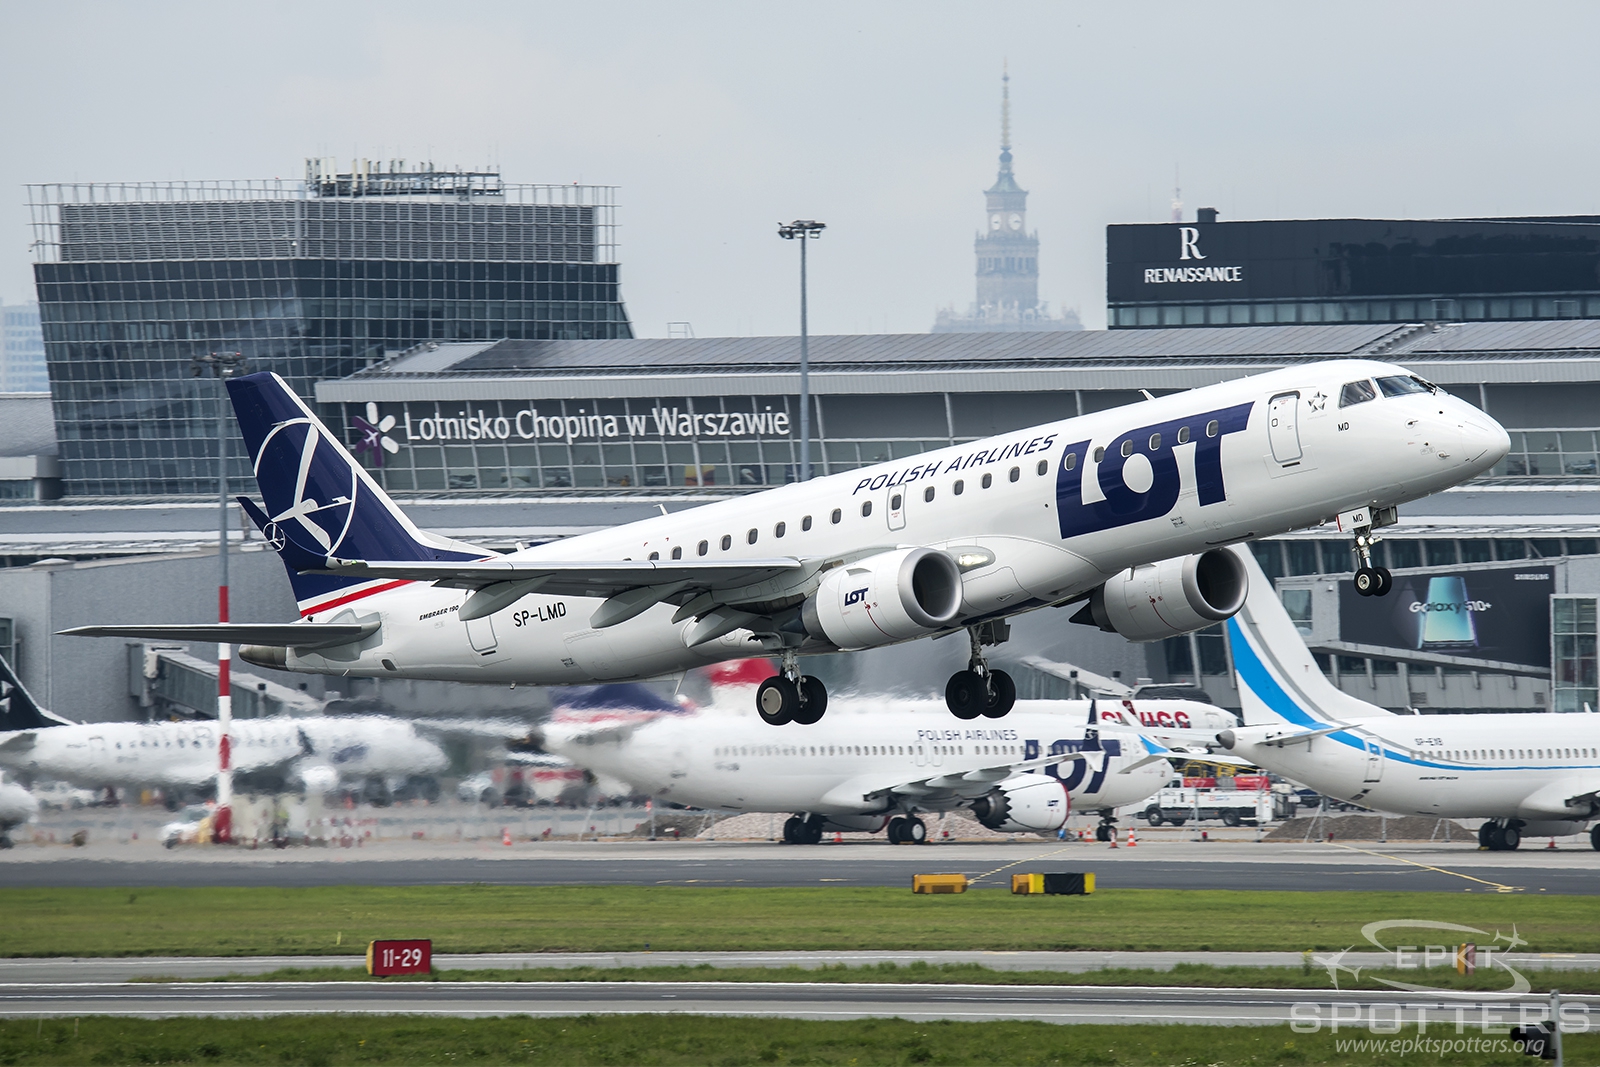 SP-LMD - Embraer 190 -100STD (LOT Polish Airlines) / Chopin / Okecie - Warsaw Poland [EPWA/WAW]